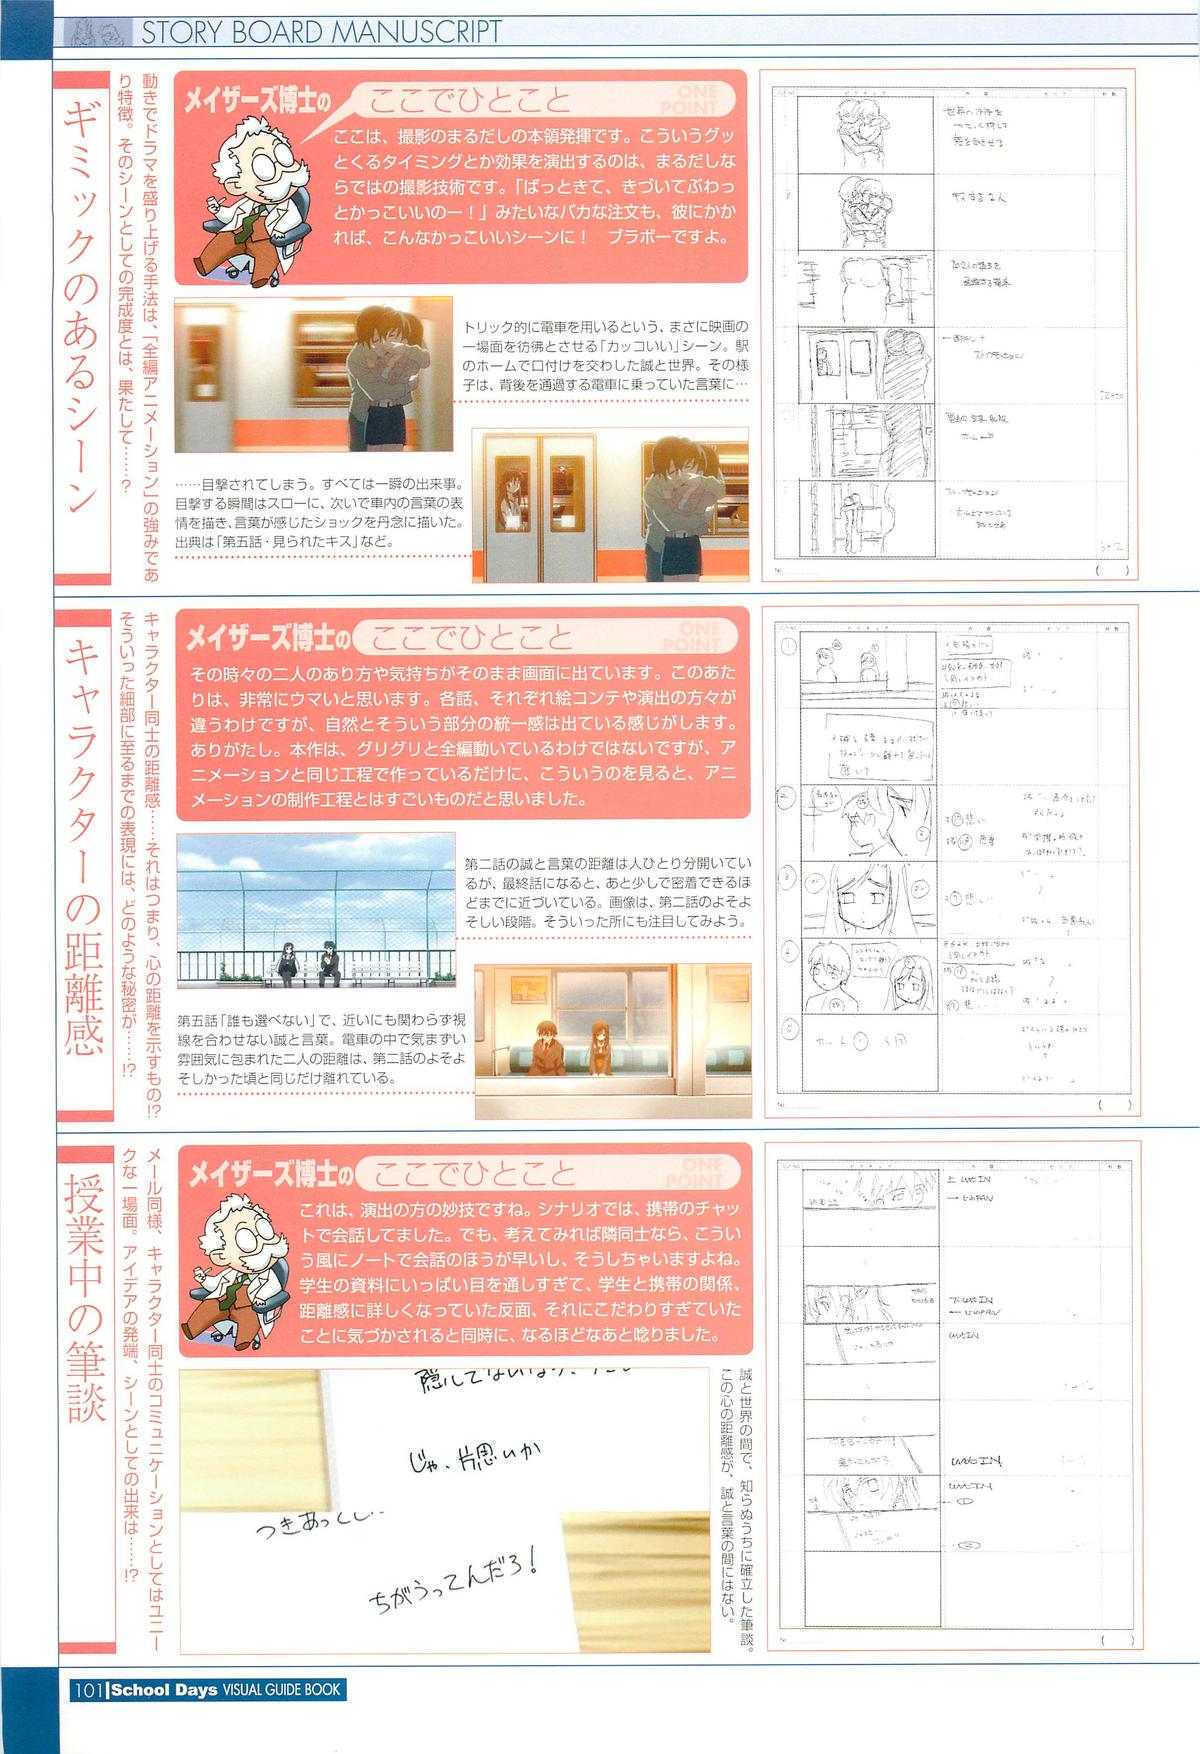 School Days Visual Guide Book School Days ビジュアル・ガイドブック